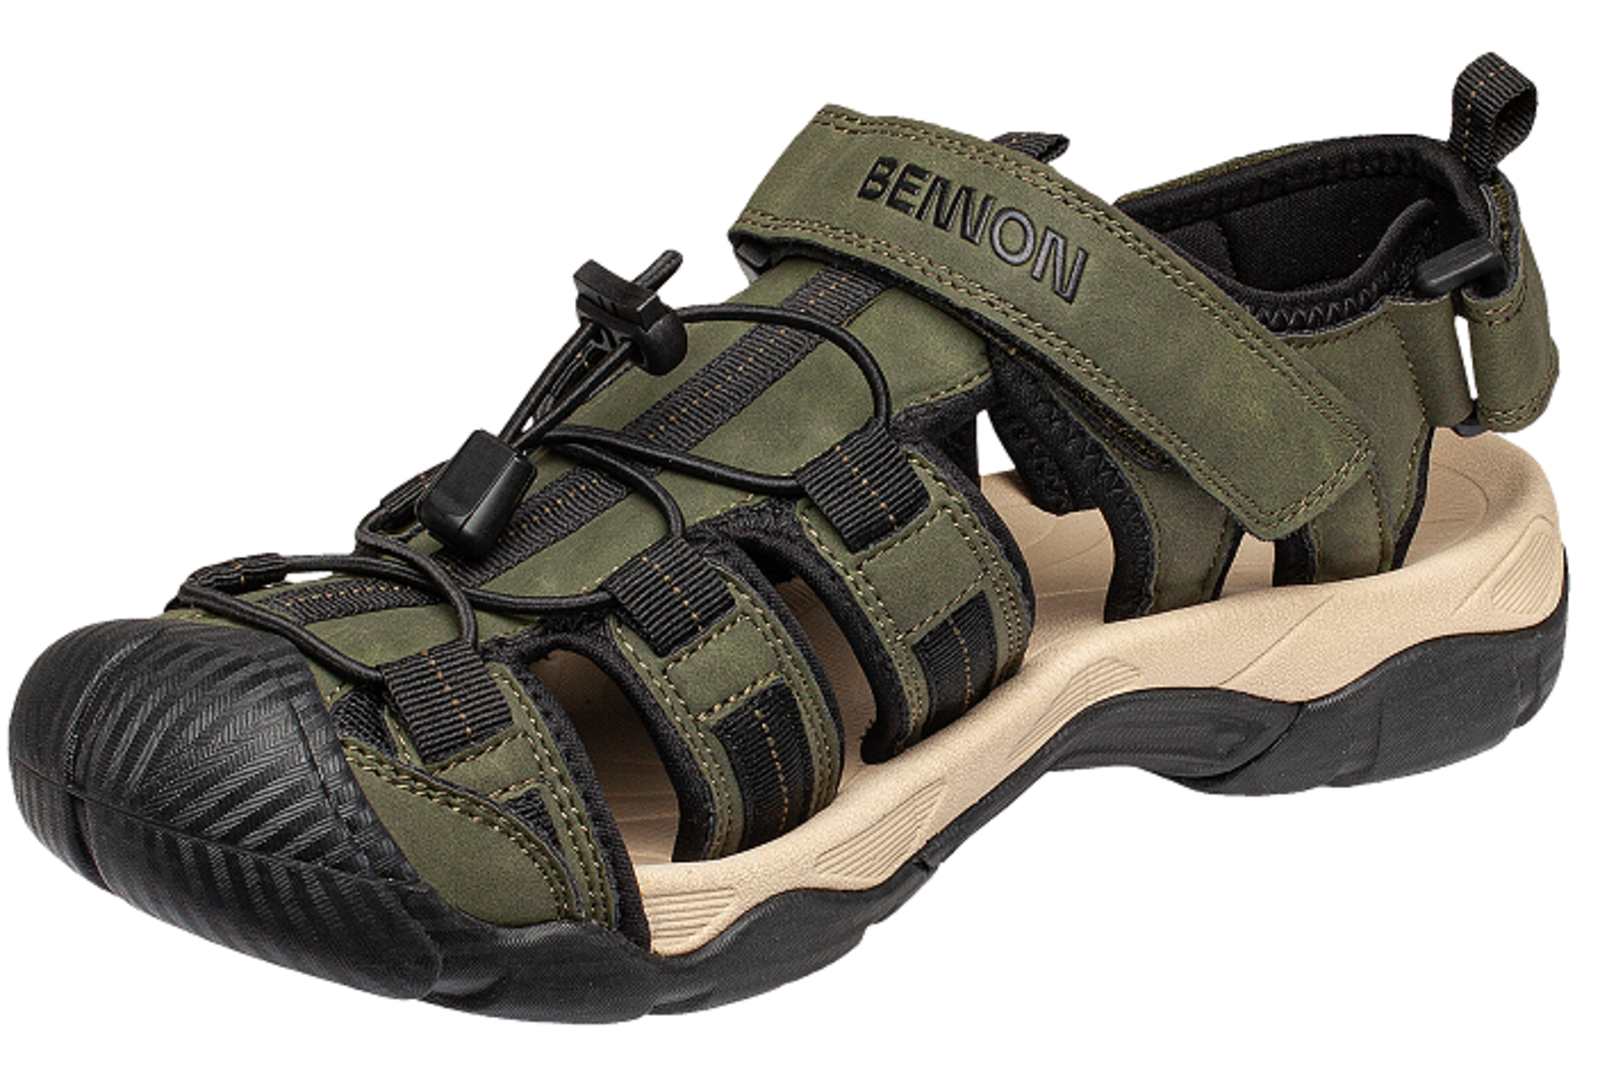 Ľahké sandále Bennon Amazon - veľkosť: 44, farba: zelená